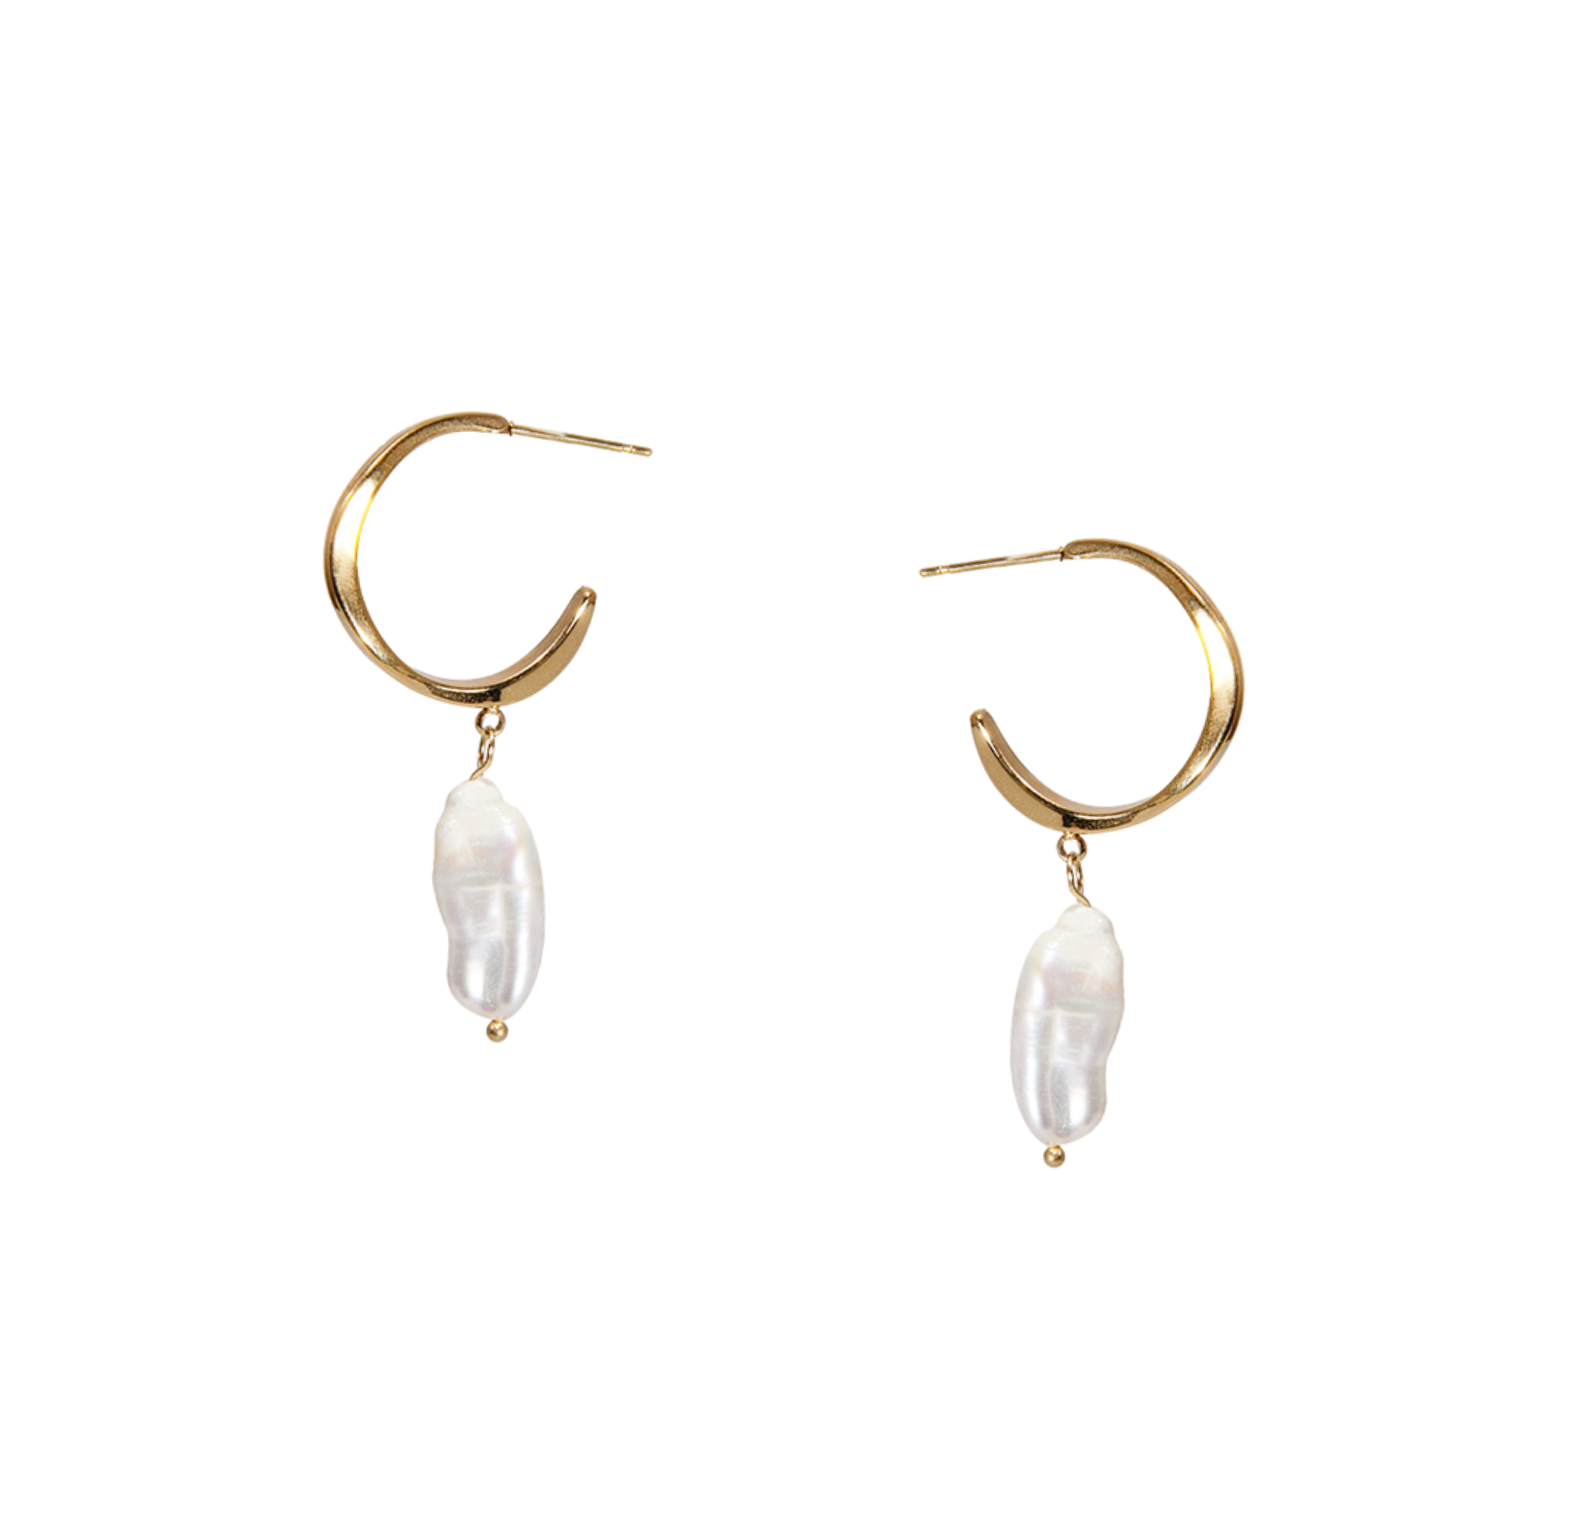 14K Gold Plated Stainless Steel Hoop Earrings With Real Pearl Drop